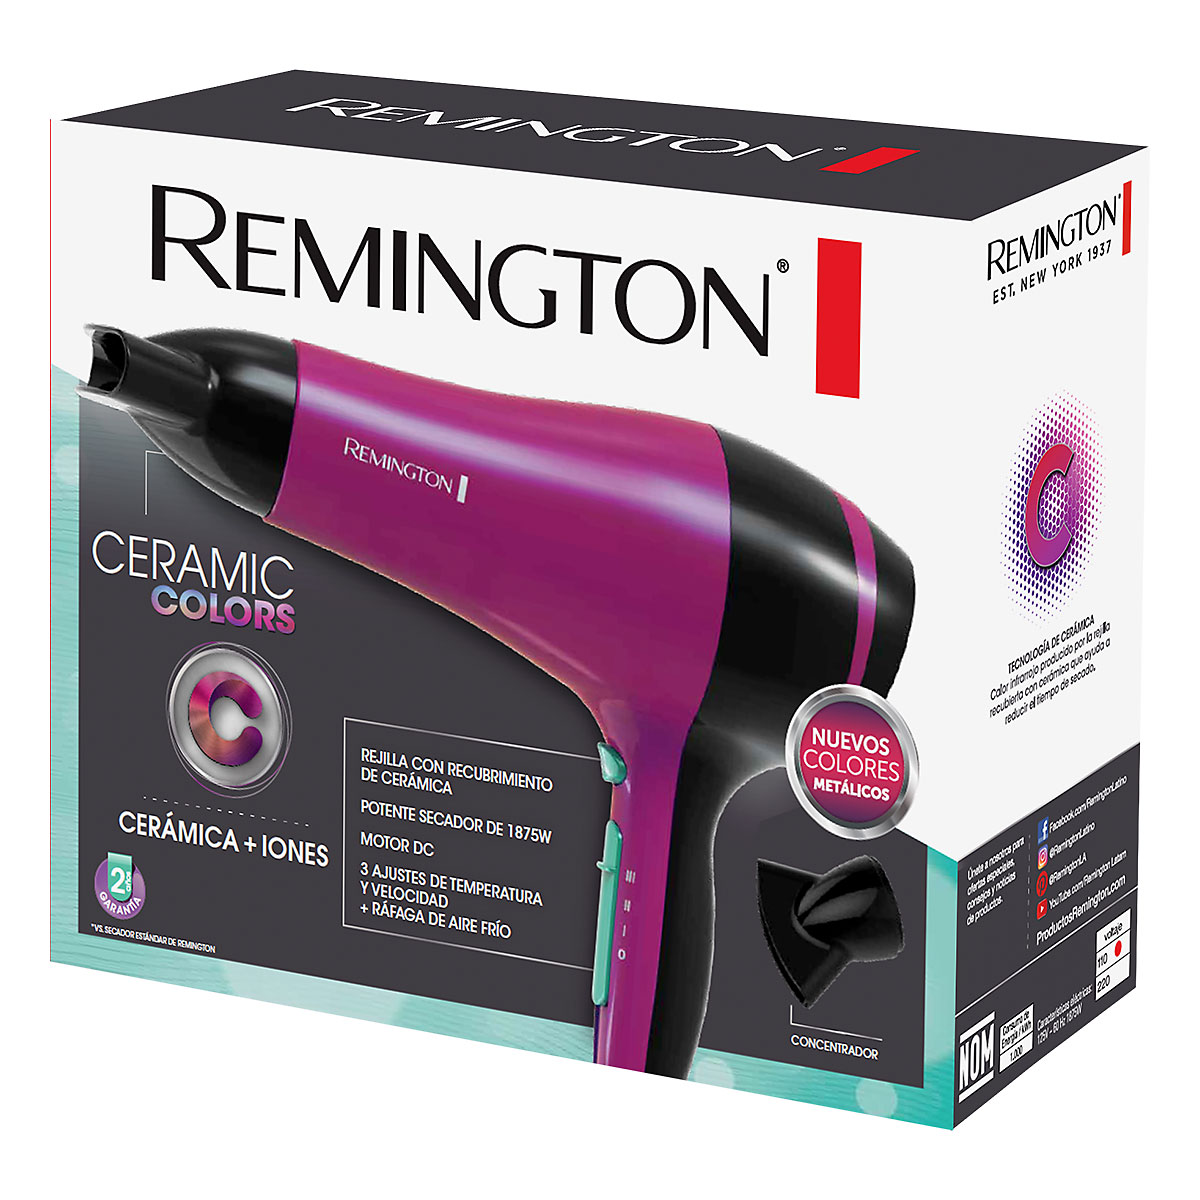 Secador Remington Compacto – Remington República Dominicana